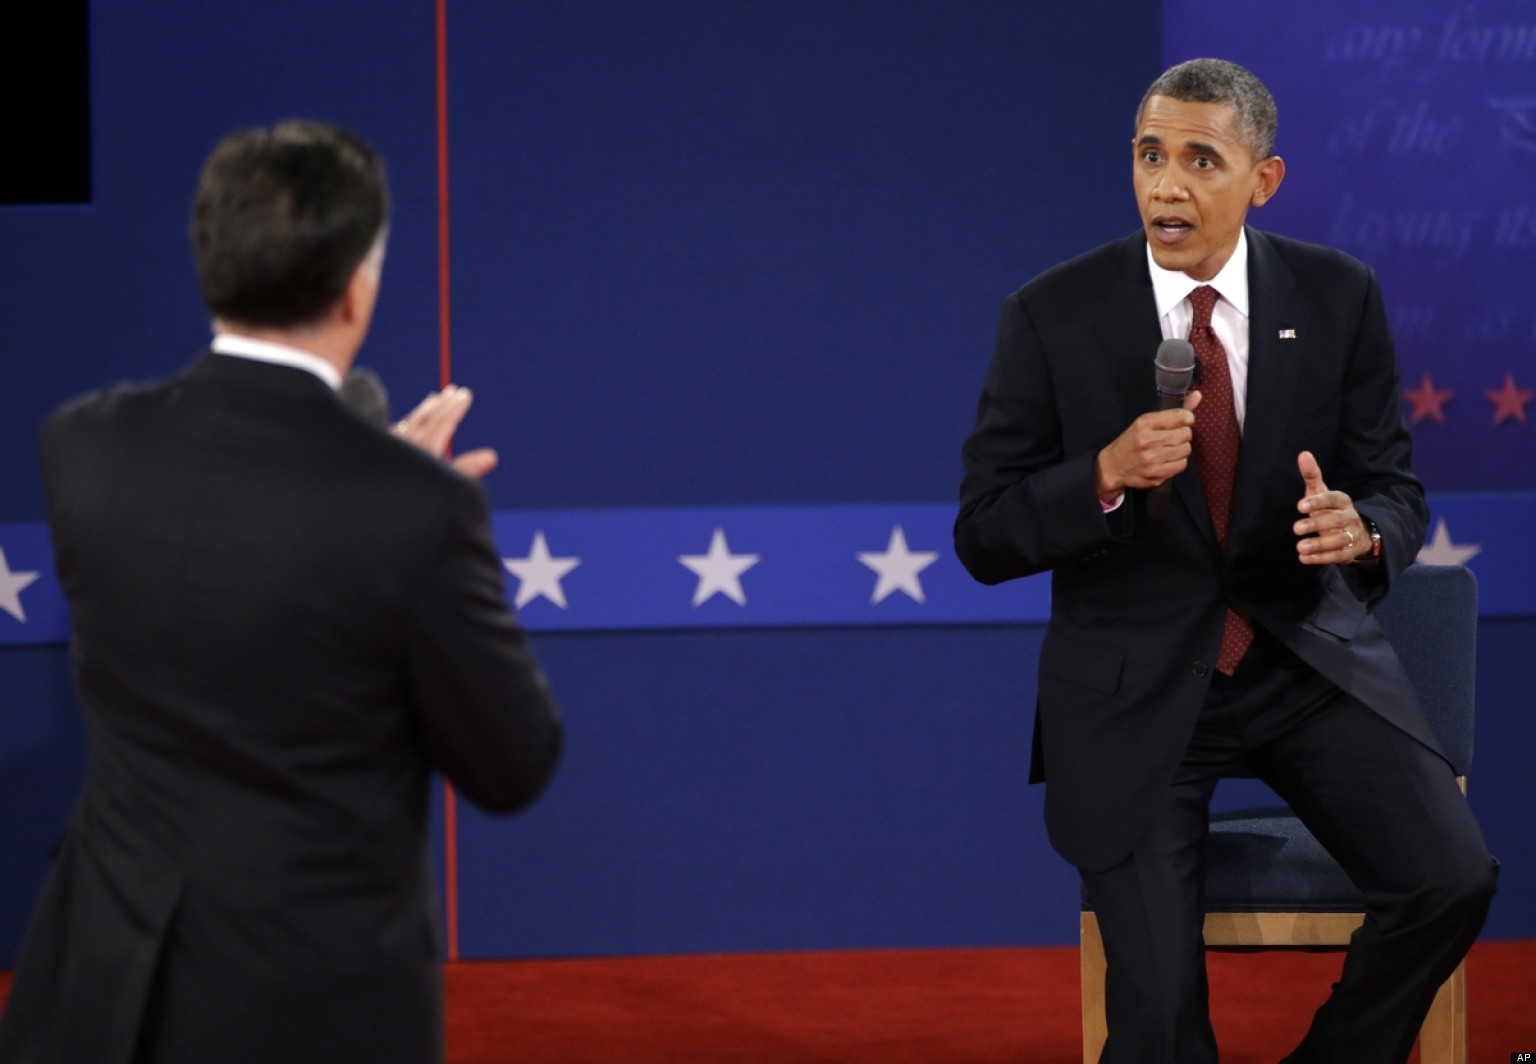 Obama Romney Presidential Debate Photos Candidates Turn Up The Intensity At Hofstra University